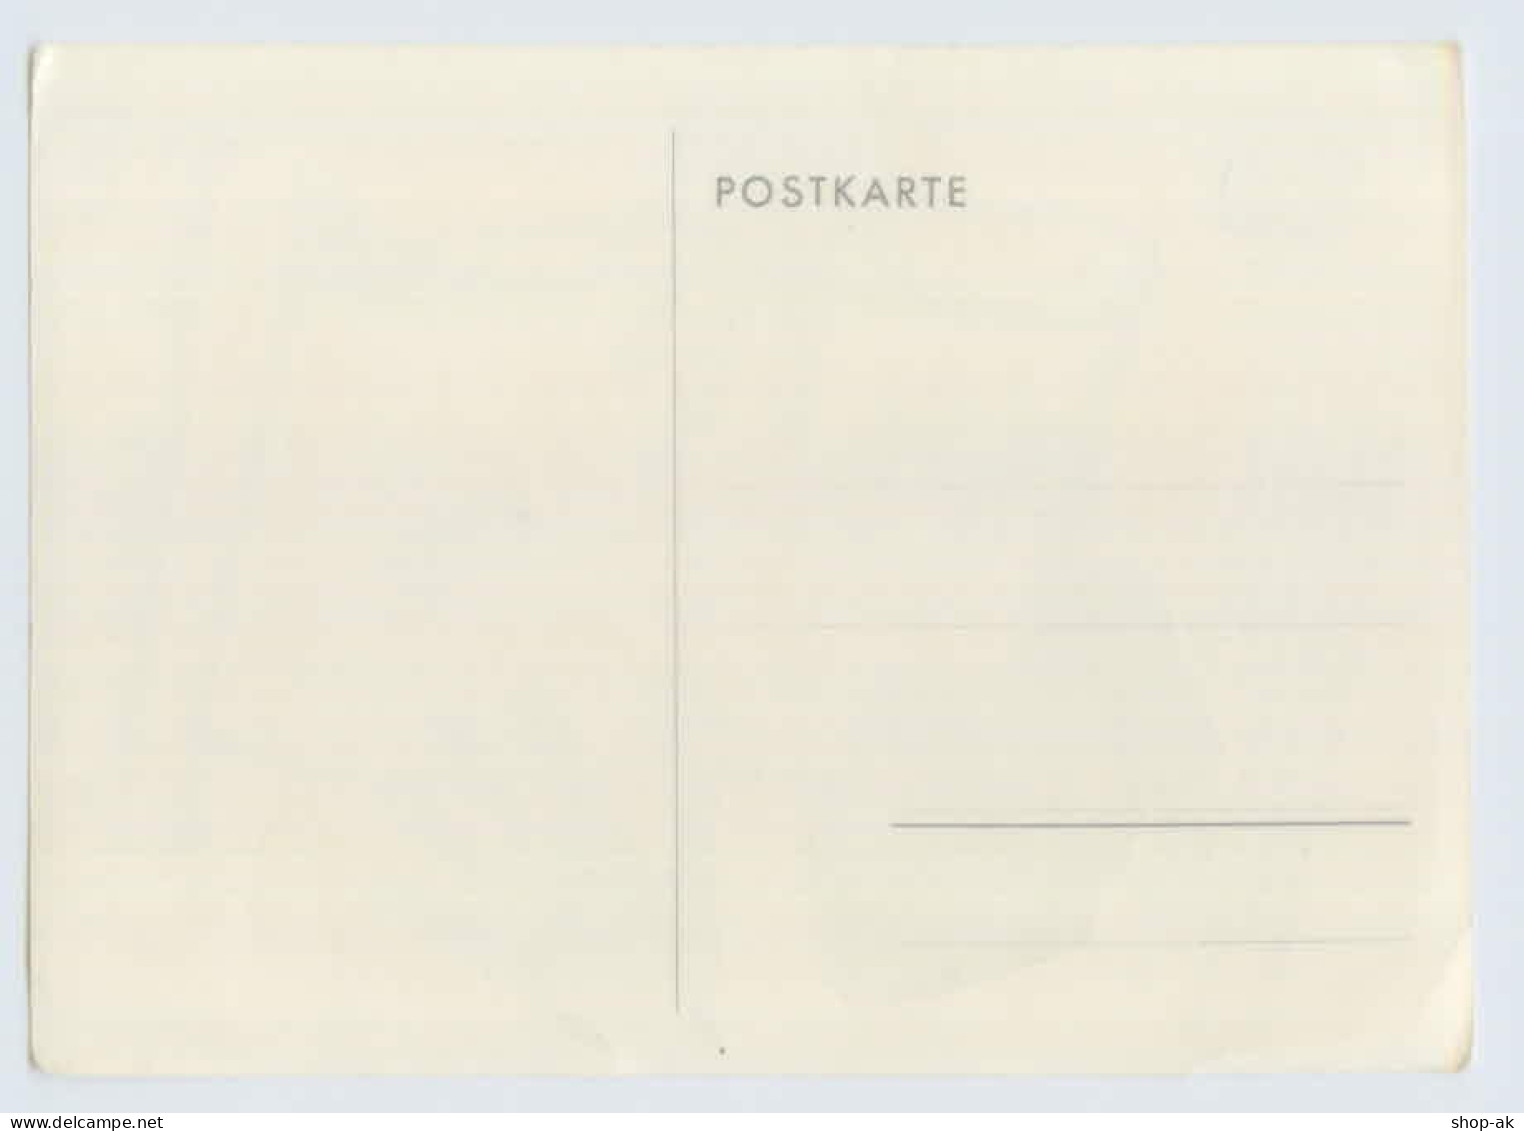 W9V88/ Papierhandtuchhalter Werbung Papierhandtücher Ca.1960 AK - Reclame